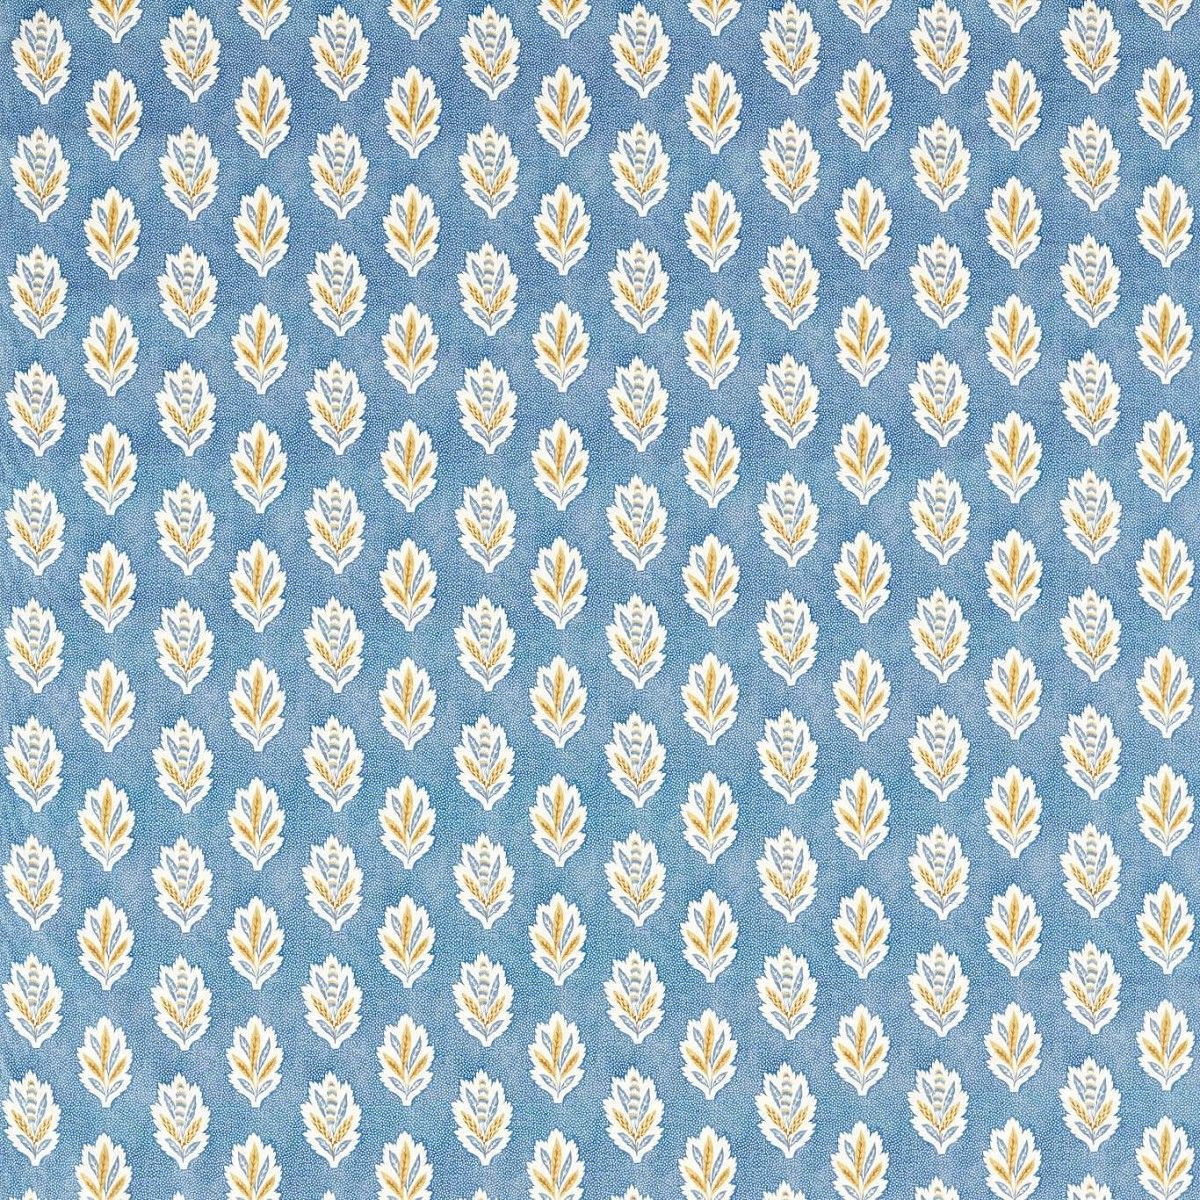 Sessile Leaf Cornflower Fabric by Sanderson